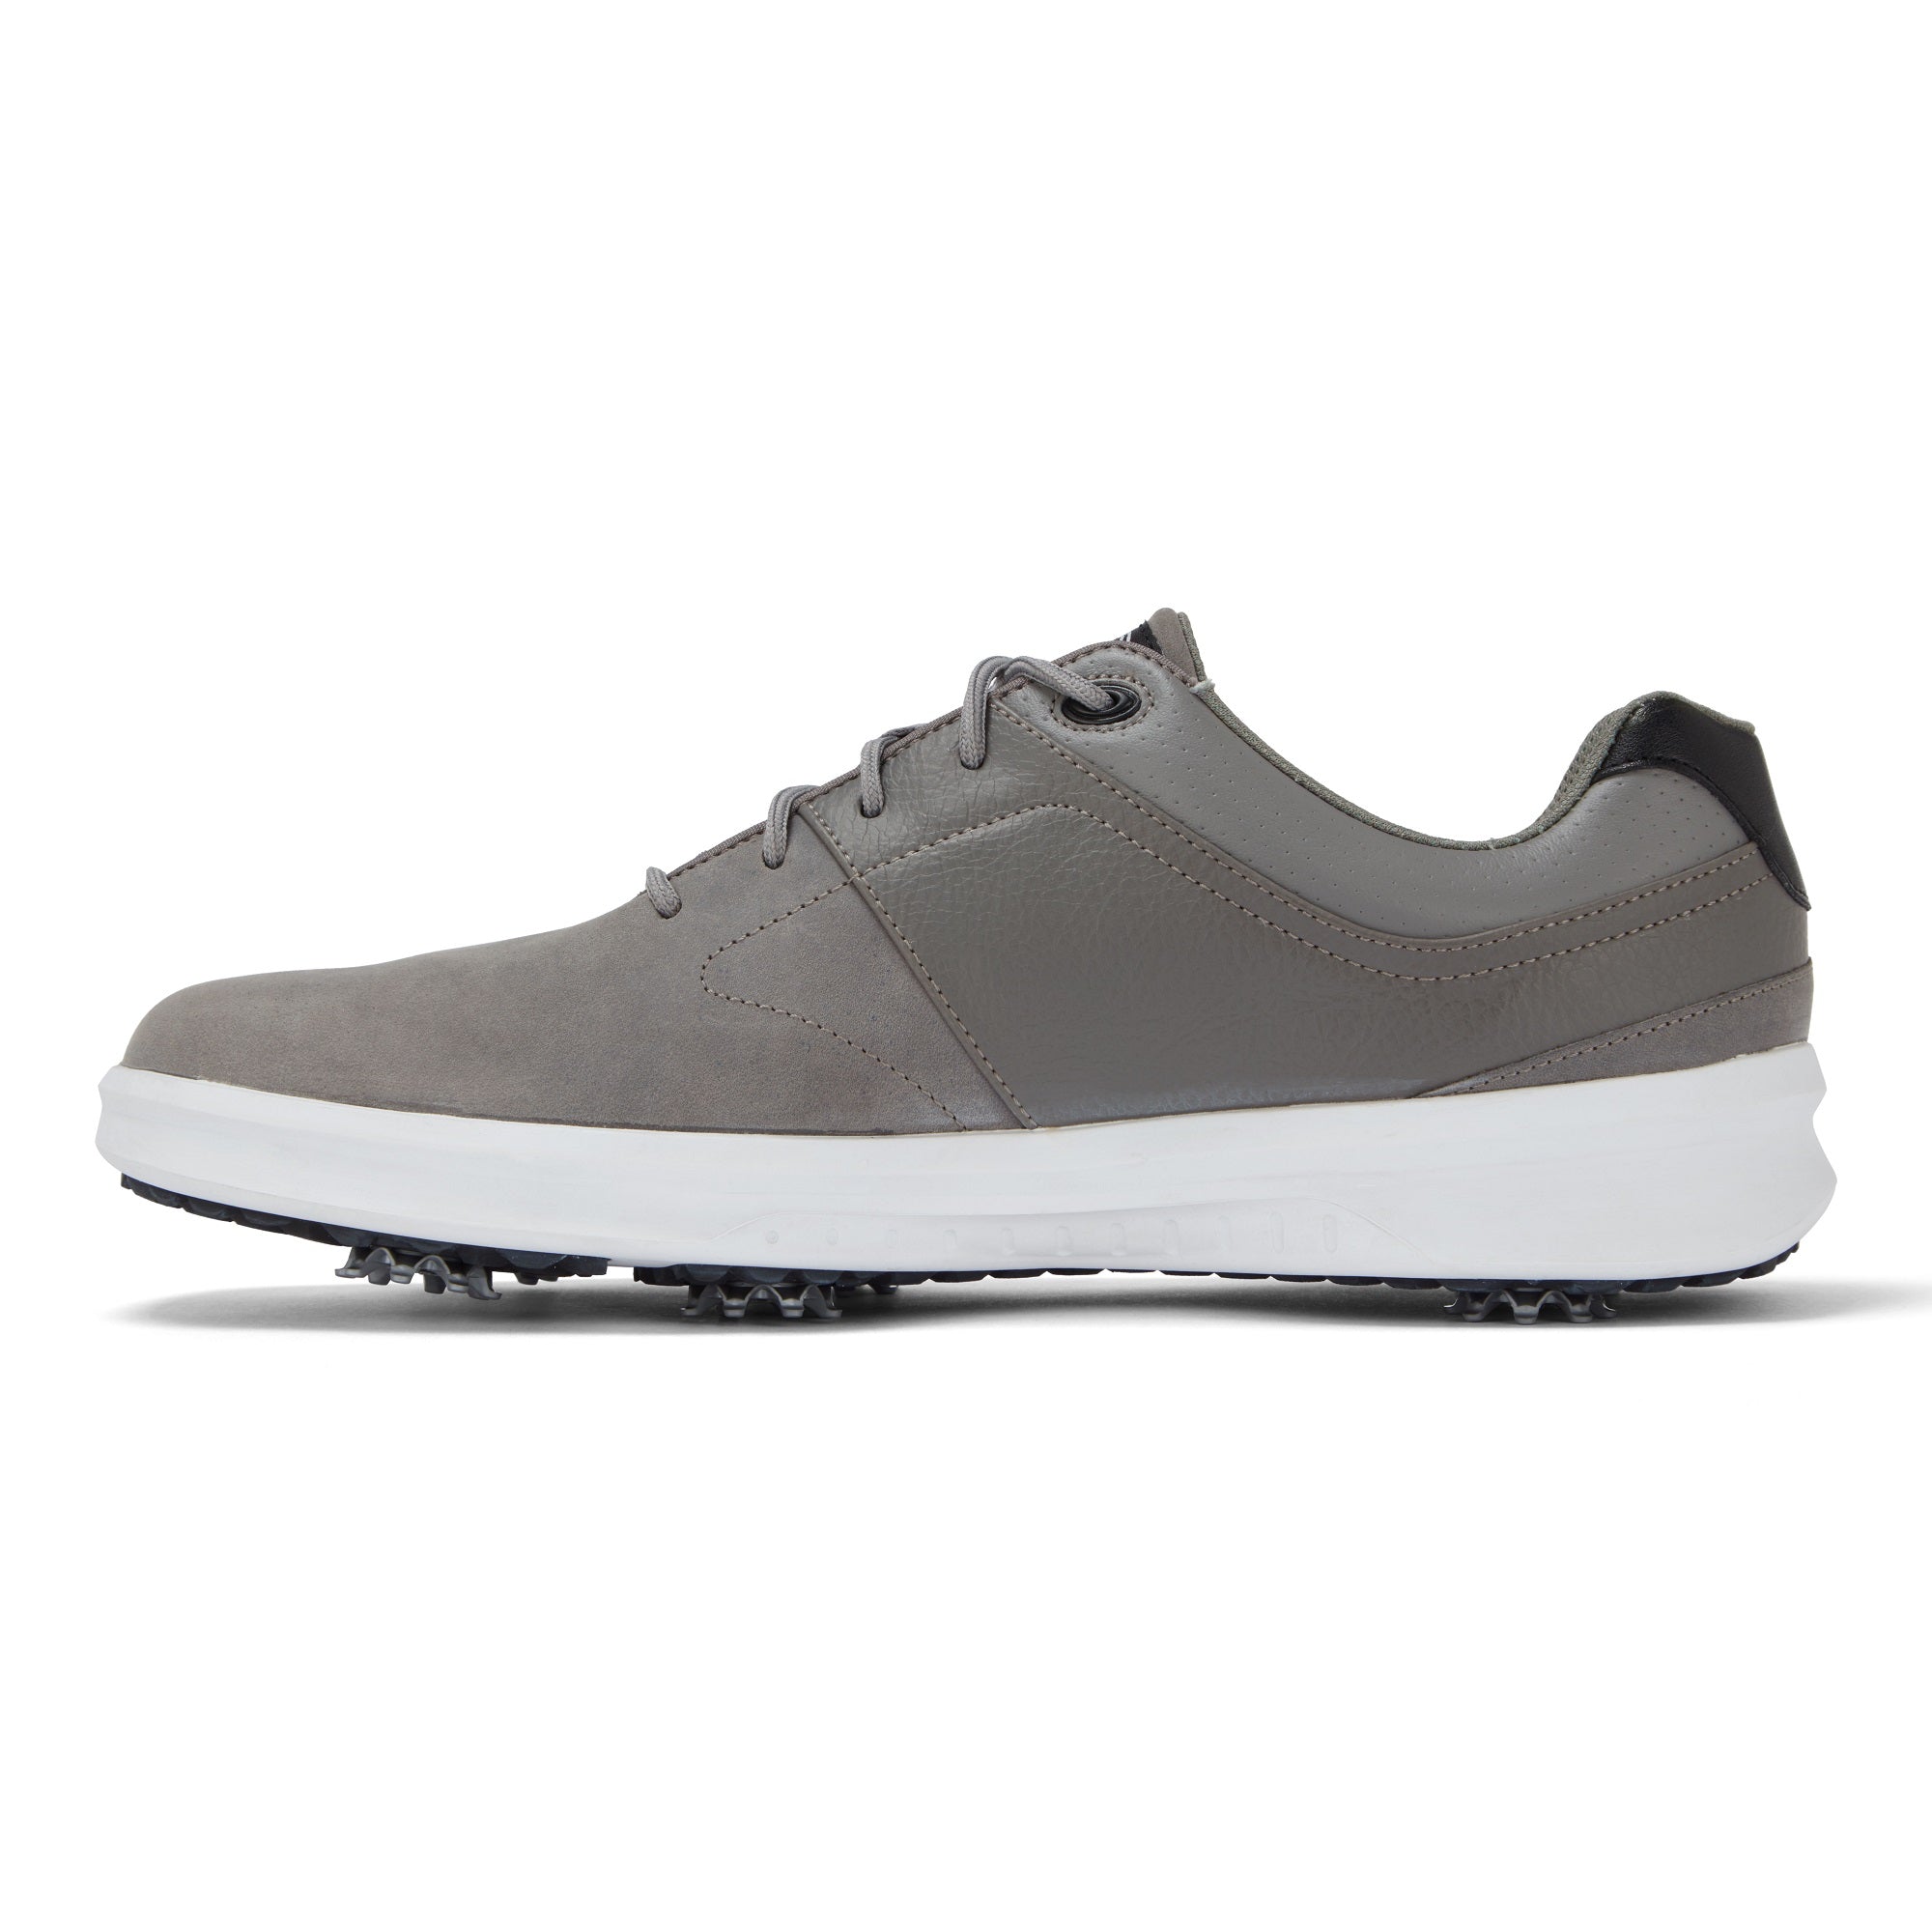 FootJoy Contour Series Golf Shoes 54129 Grey | Function18